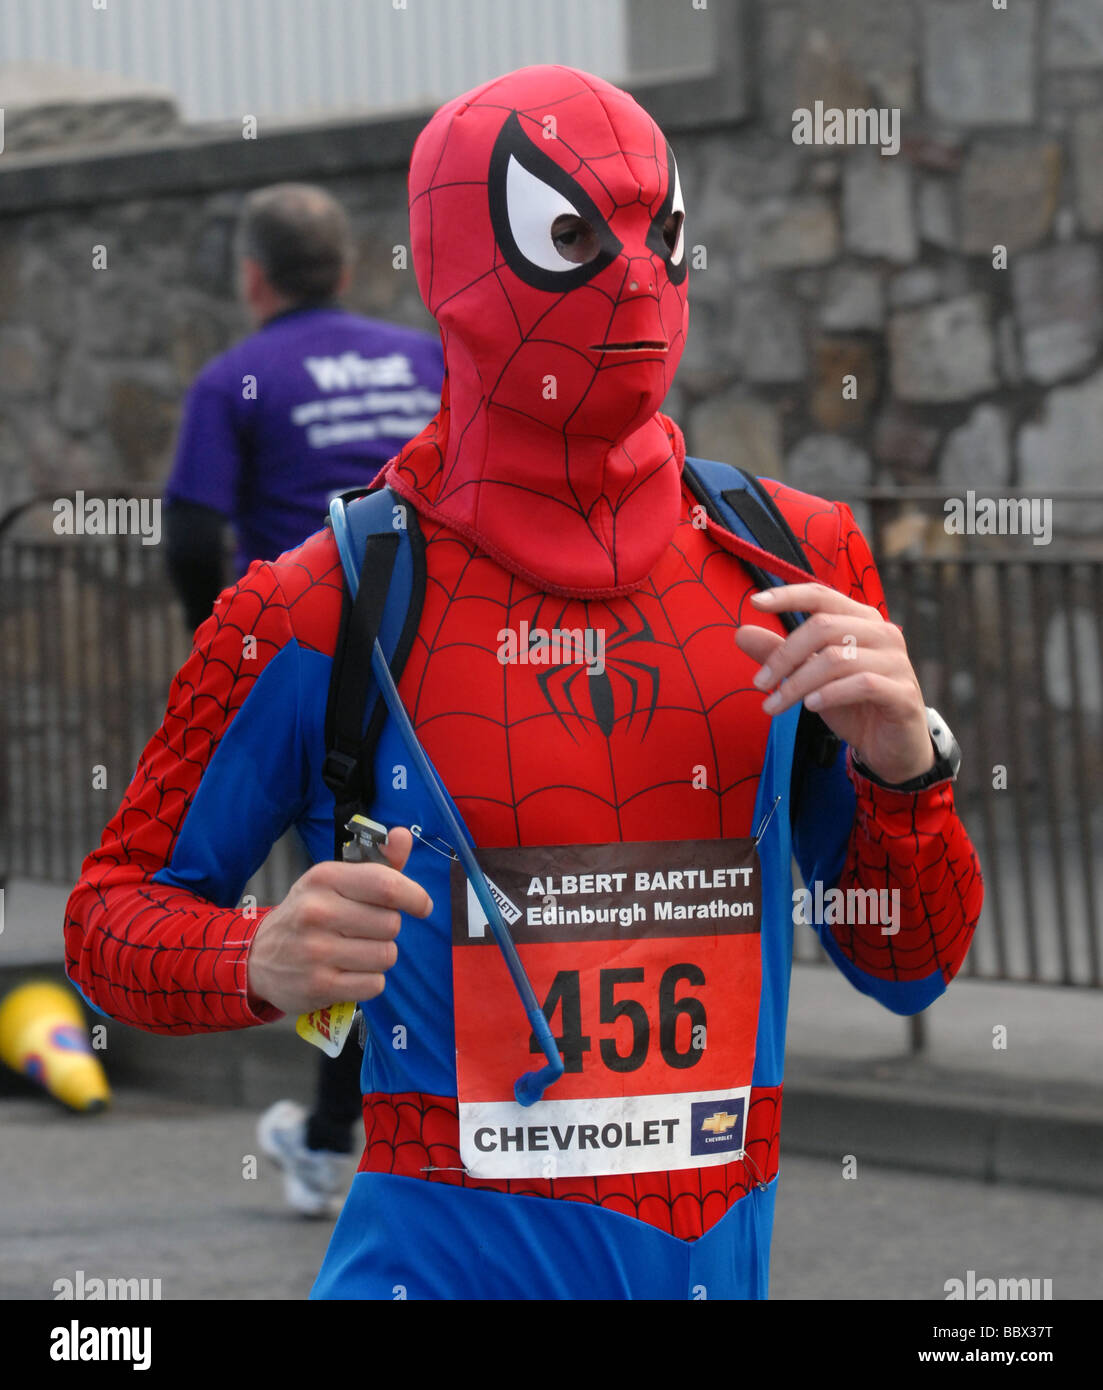 Runners in the Edinburgh marathon in fancy dress Stock Photo